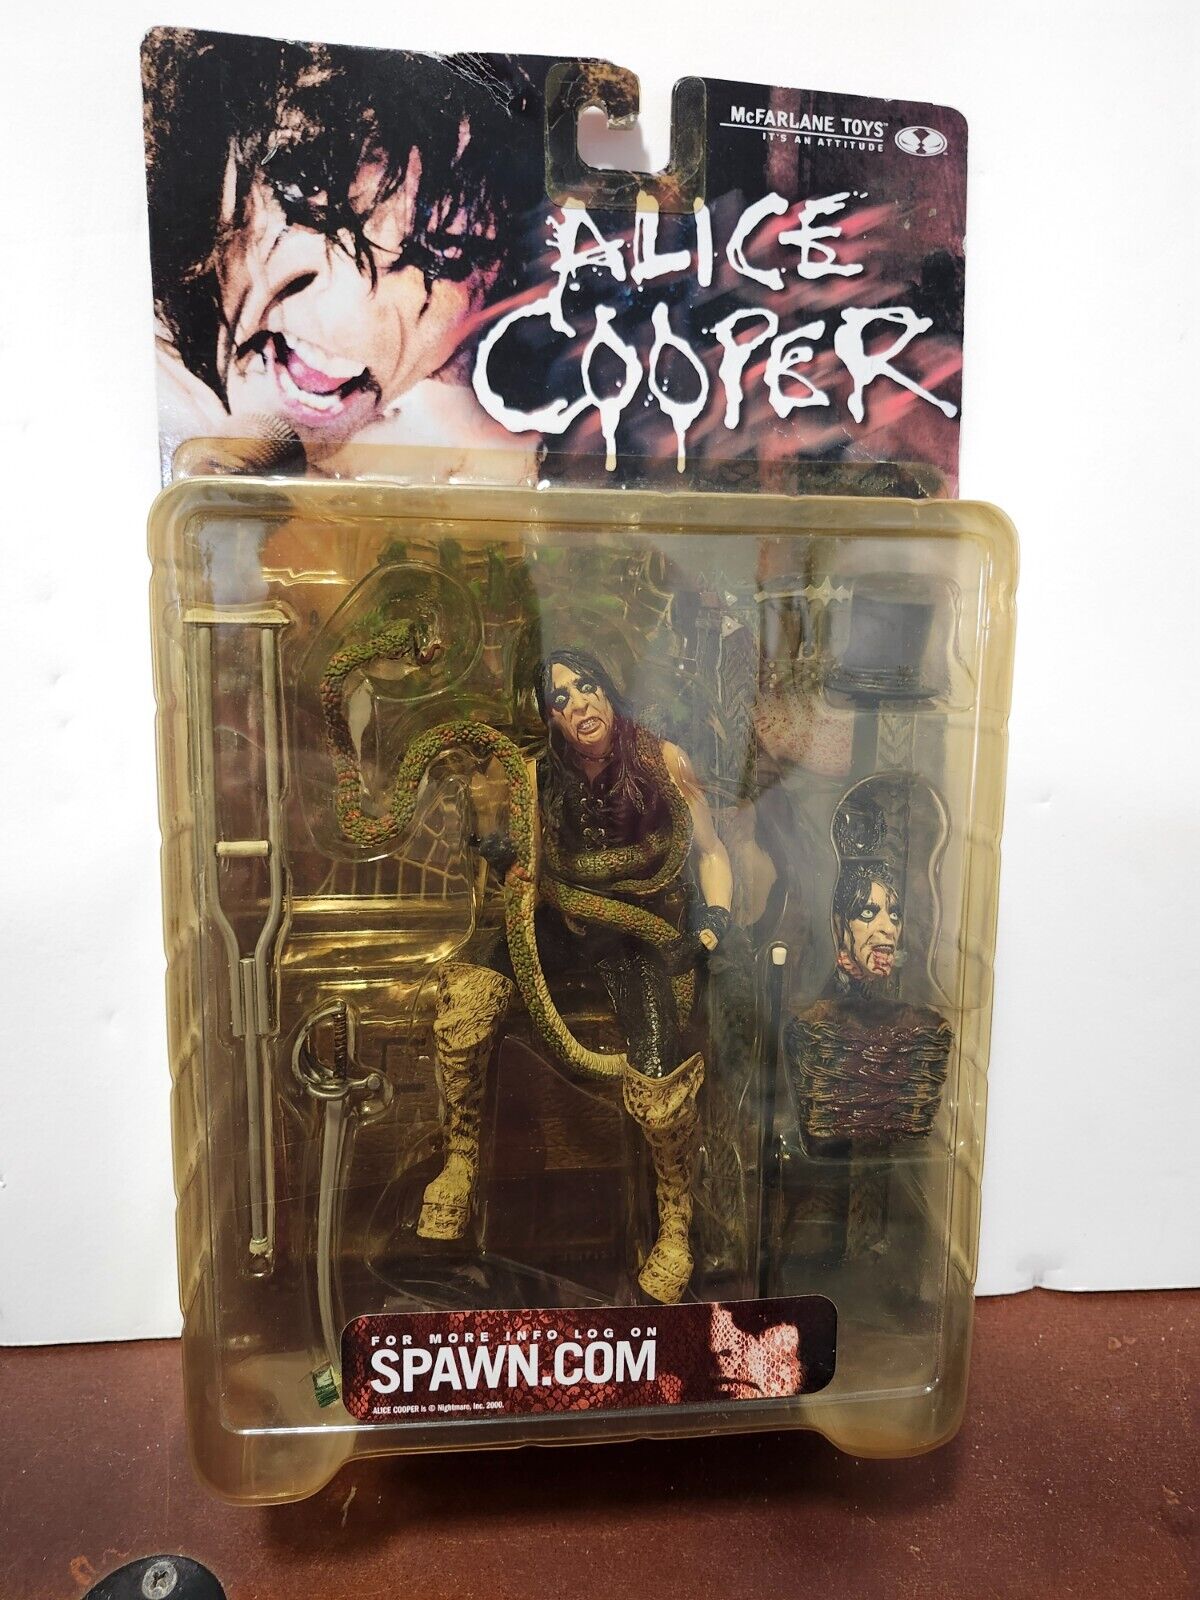 Astonishing Alice Cooper Super Stage Action Figure – McFarlane 2000 Spawn Brand New Sealed on eBay